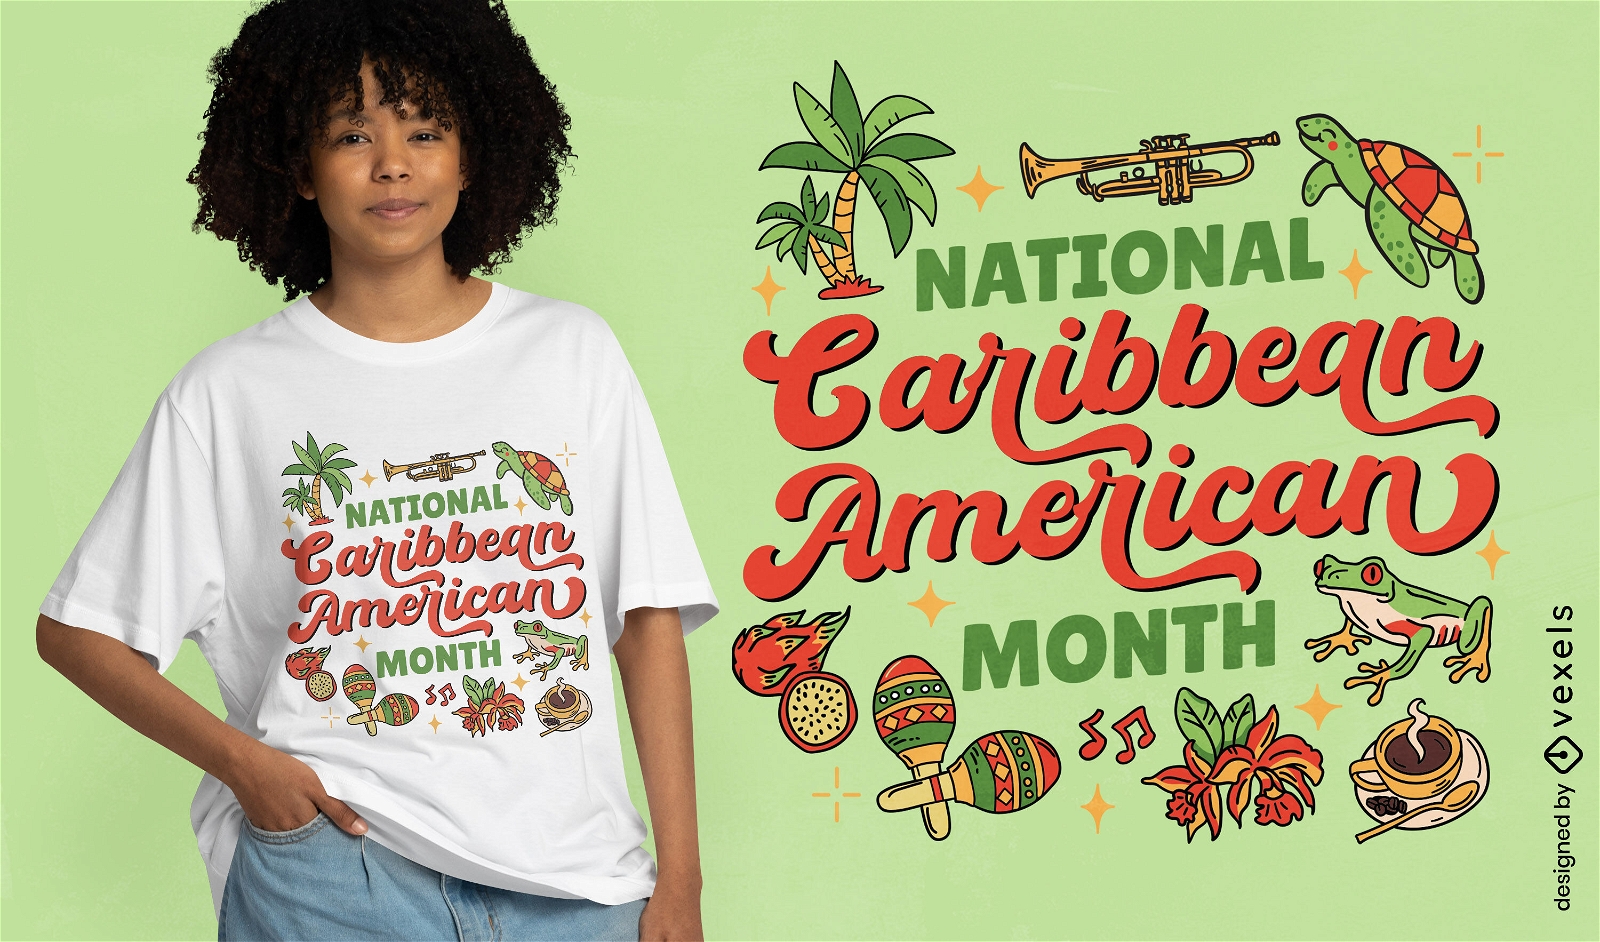 Dise?o de camiseta del mes caribe?o americano.